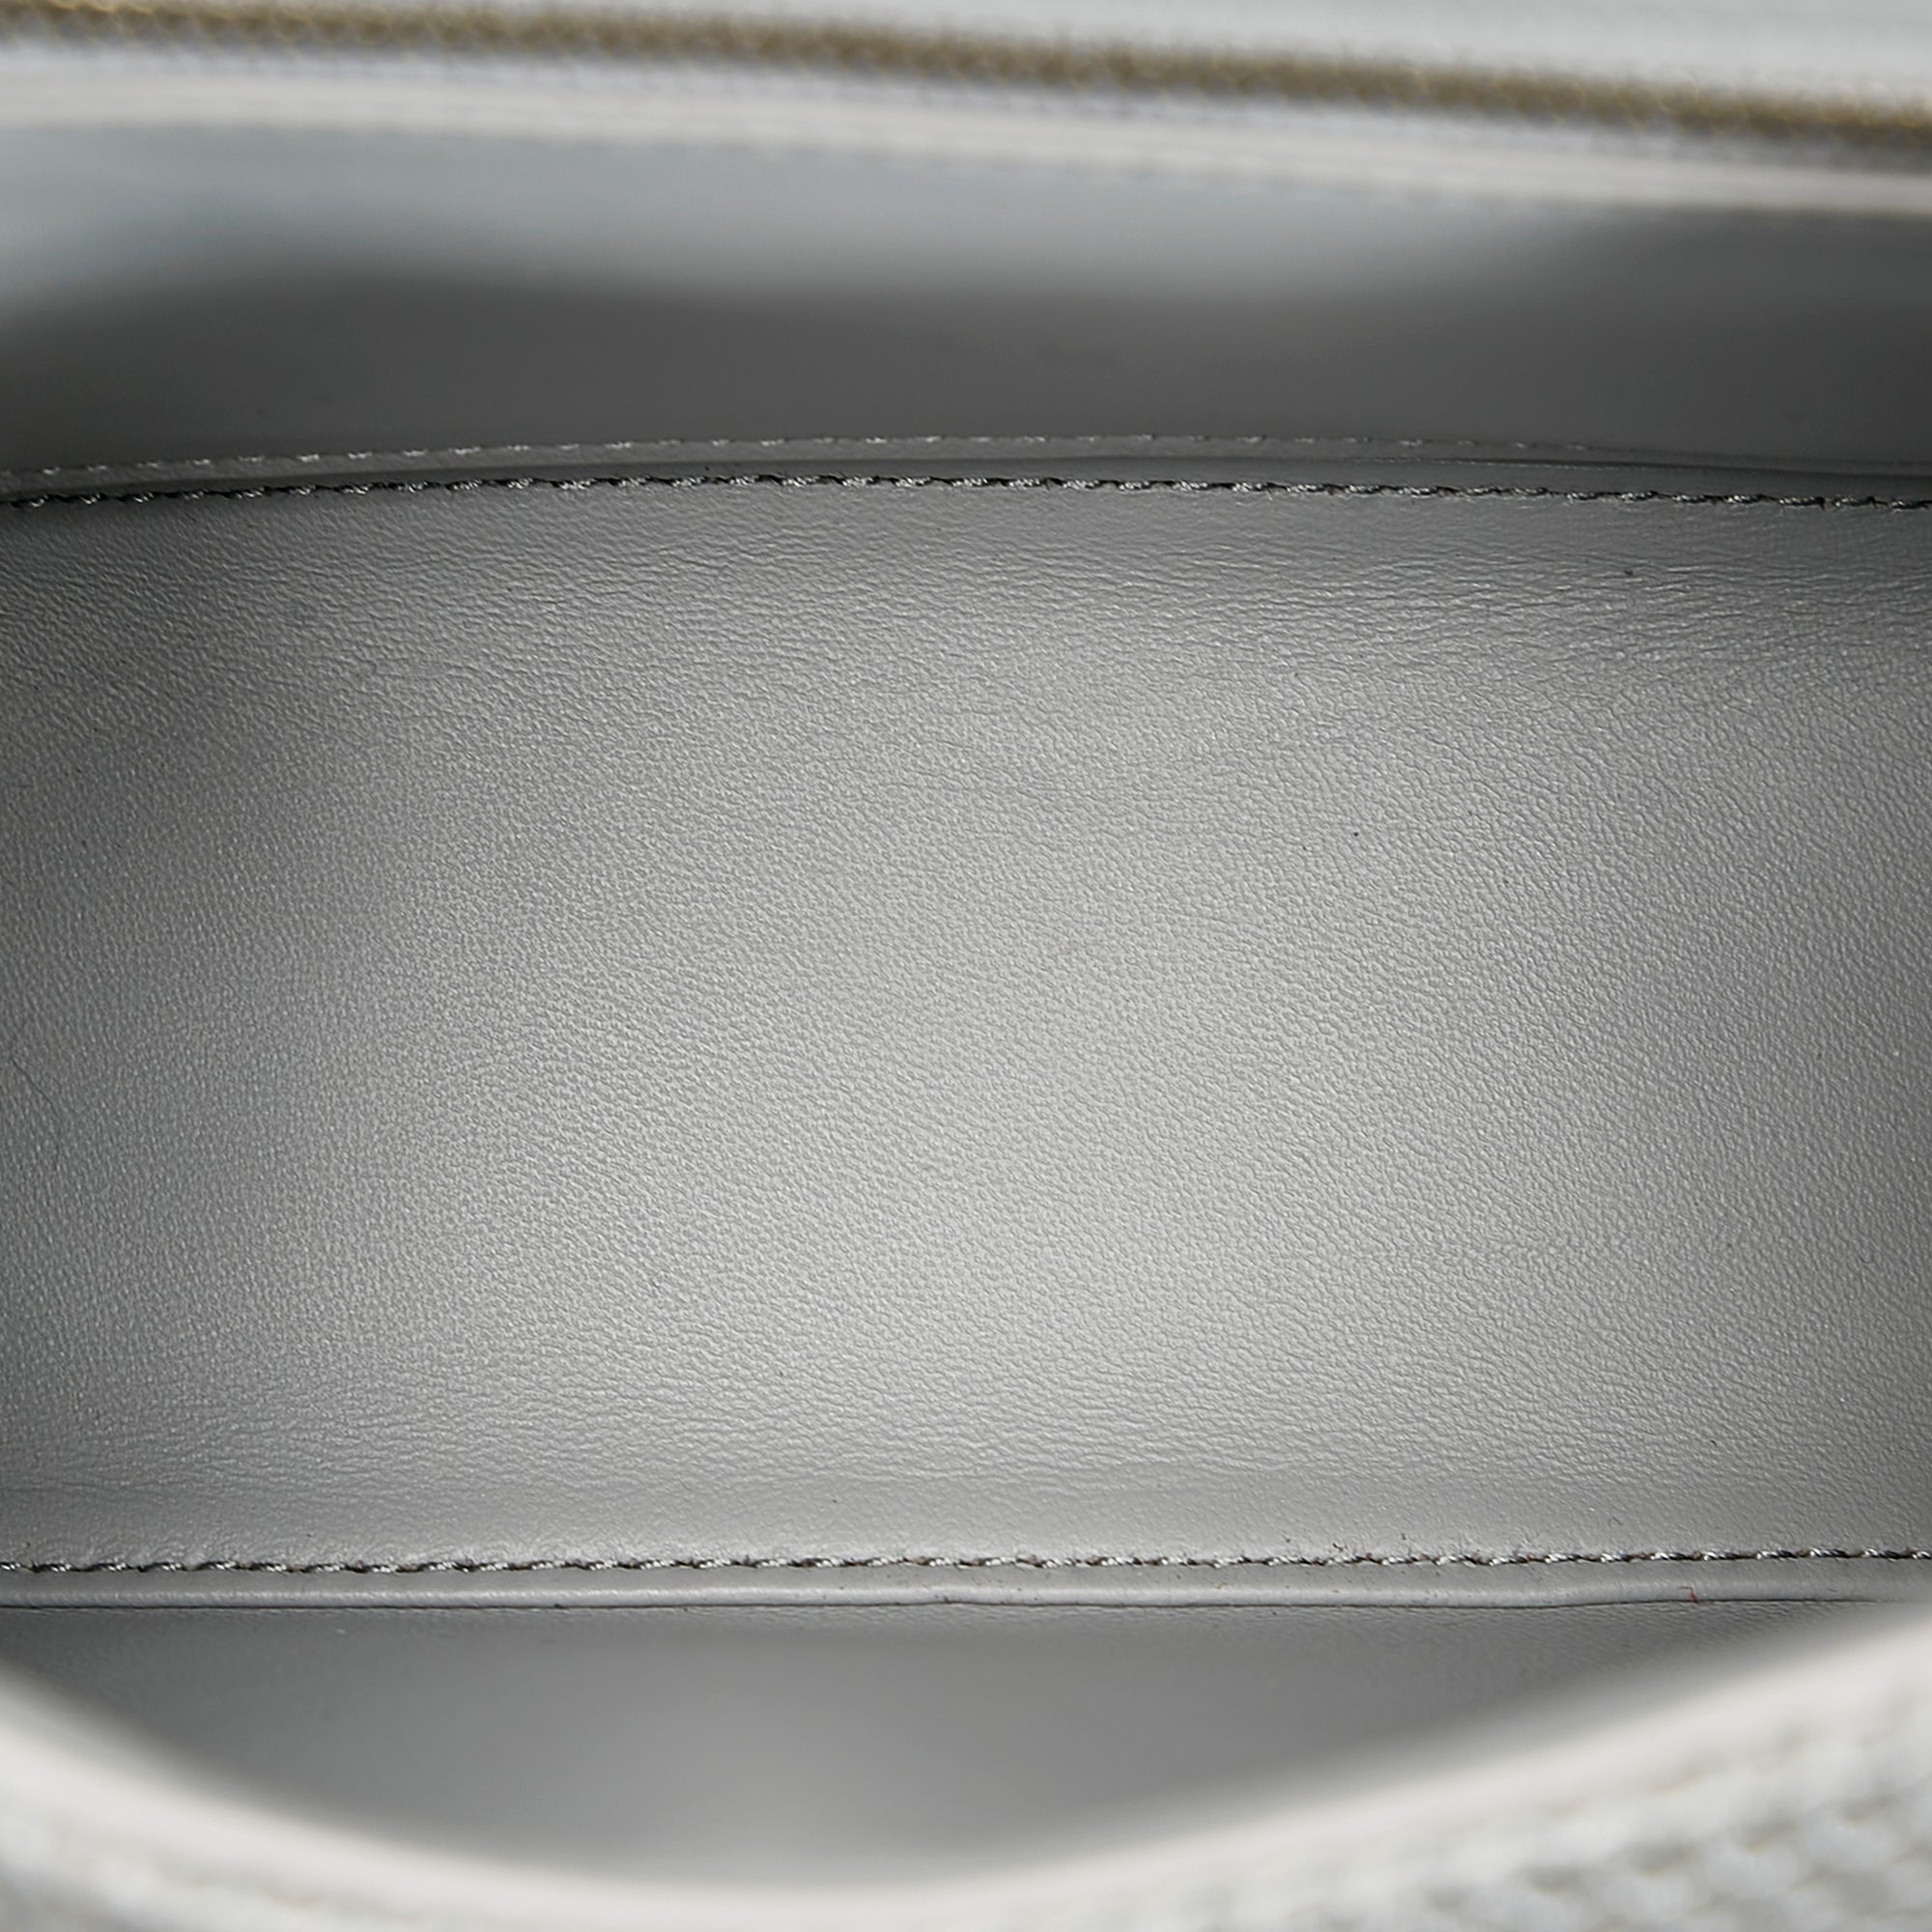 Balenciaga Sneakerhead Top Handle Small White/Orange in Leather with  Silver-tone - US